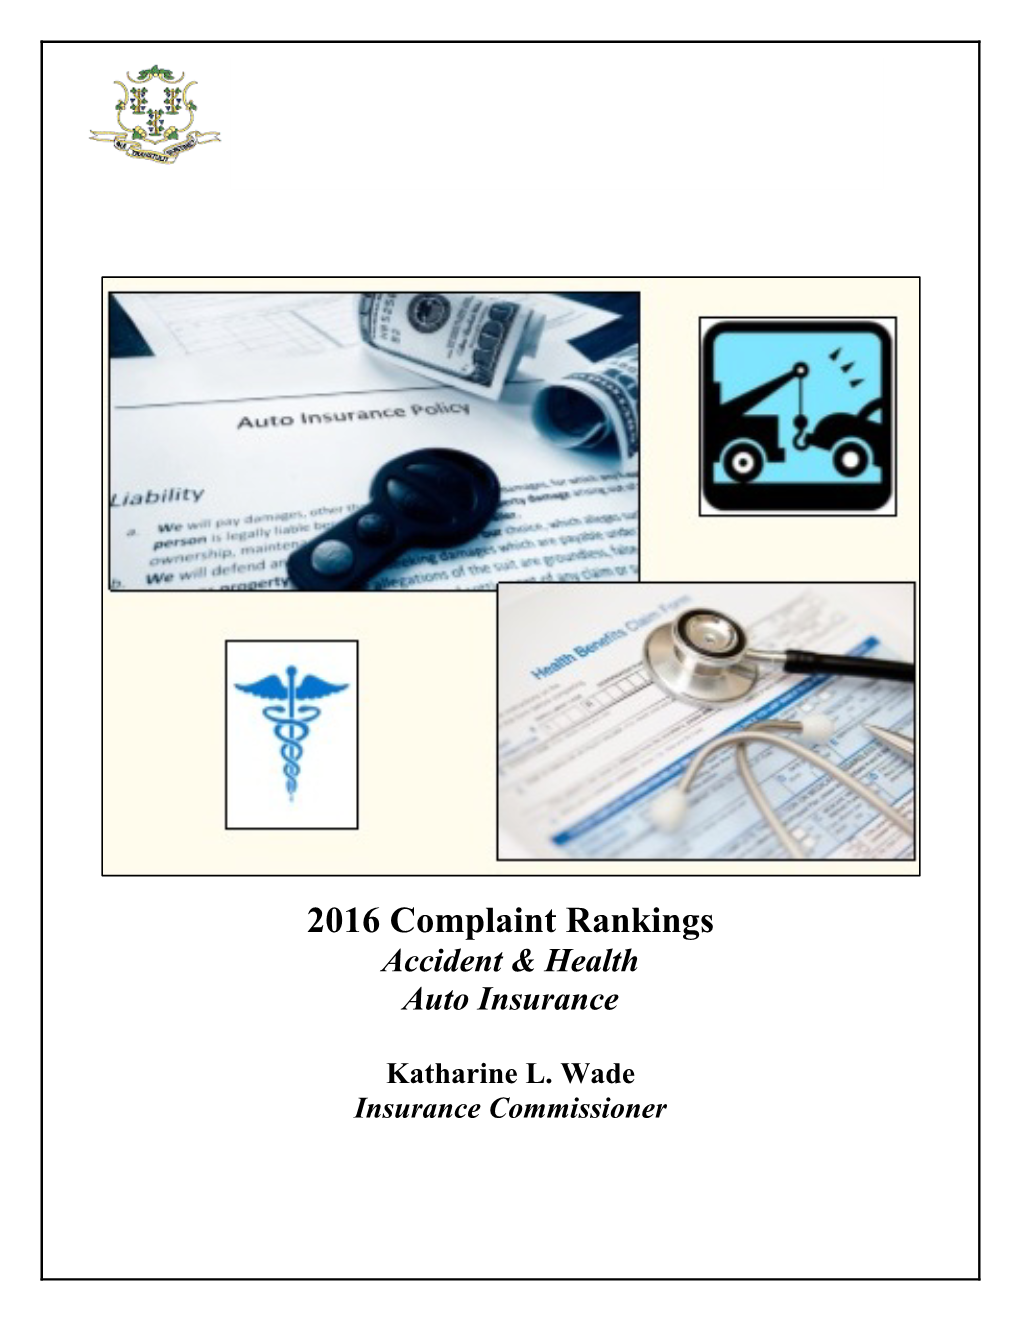 2016 Complaint Ranking Report